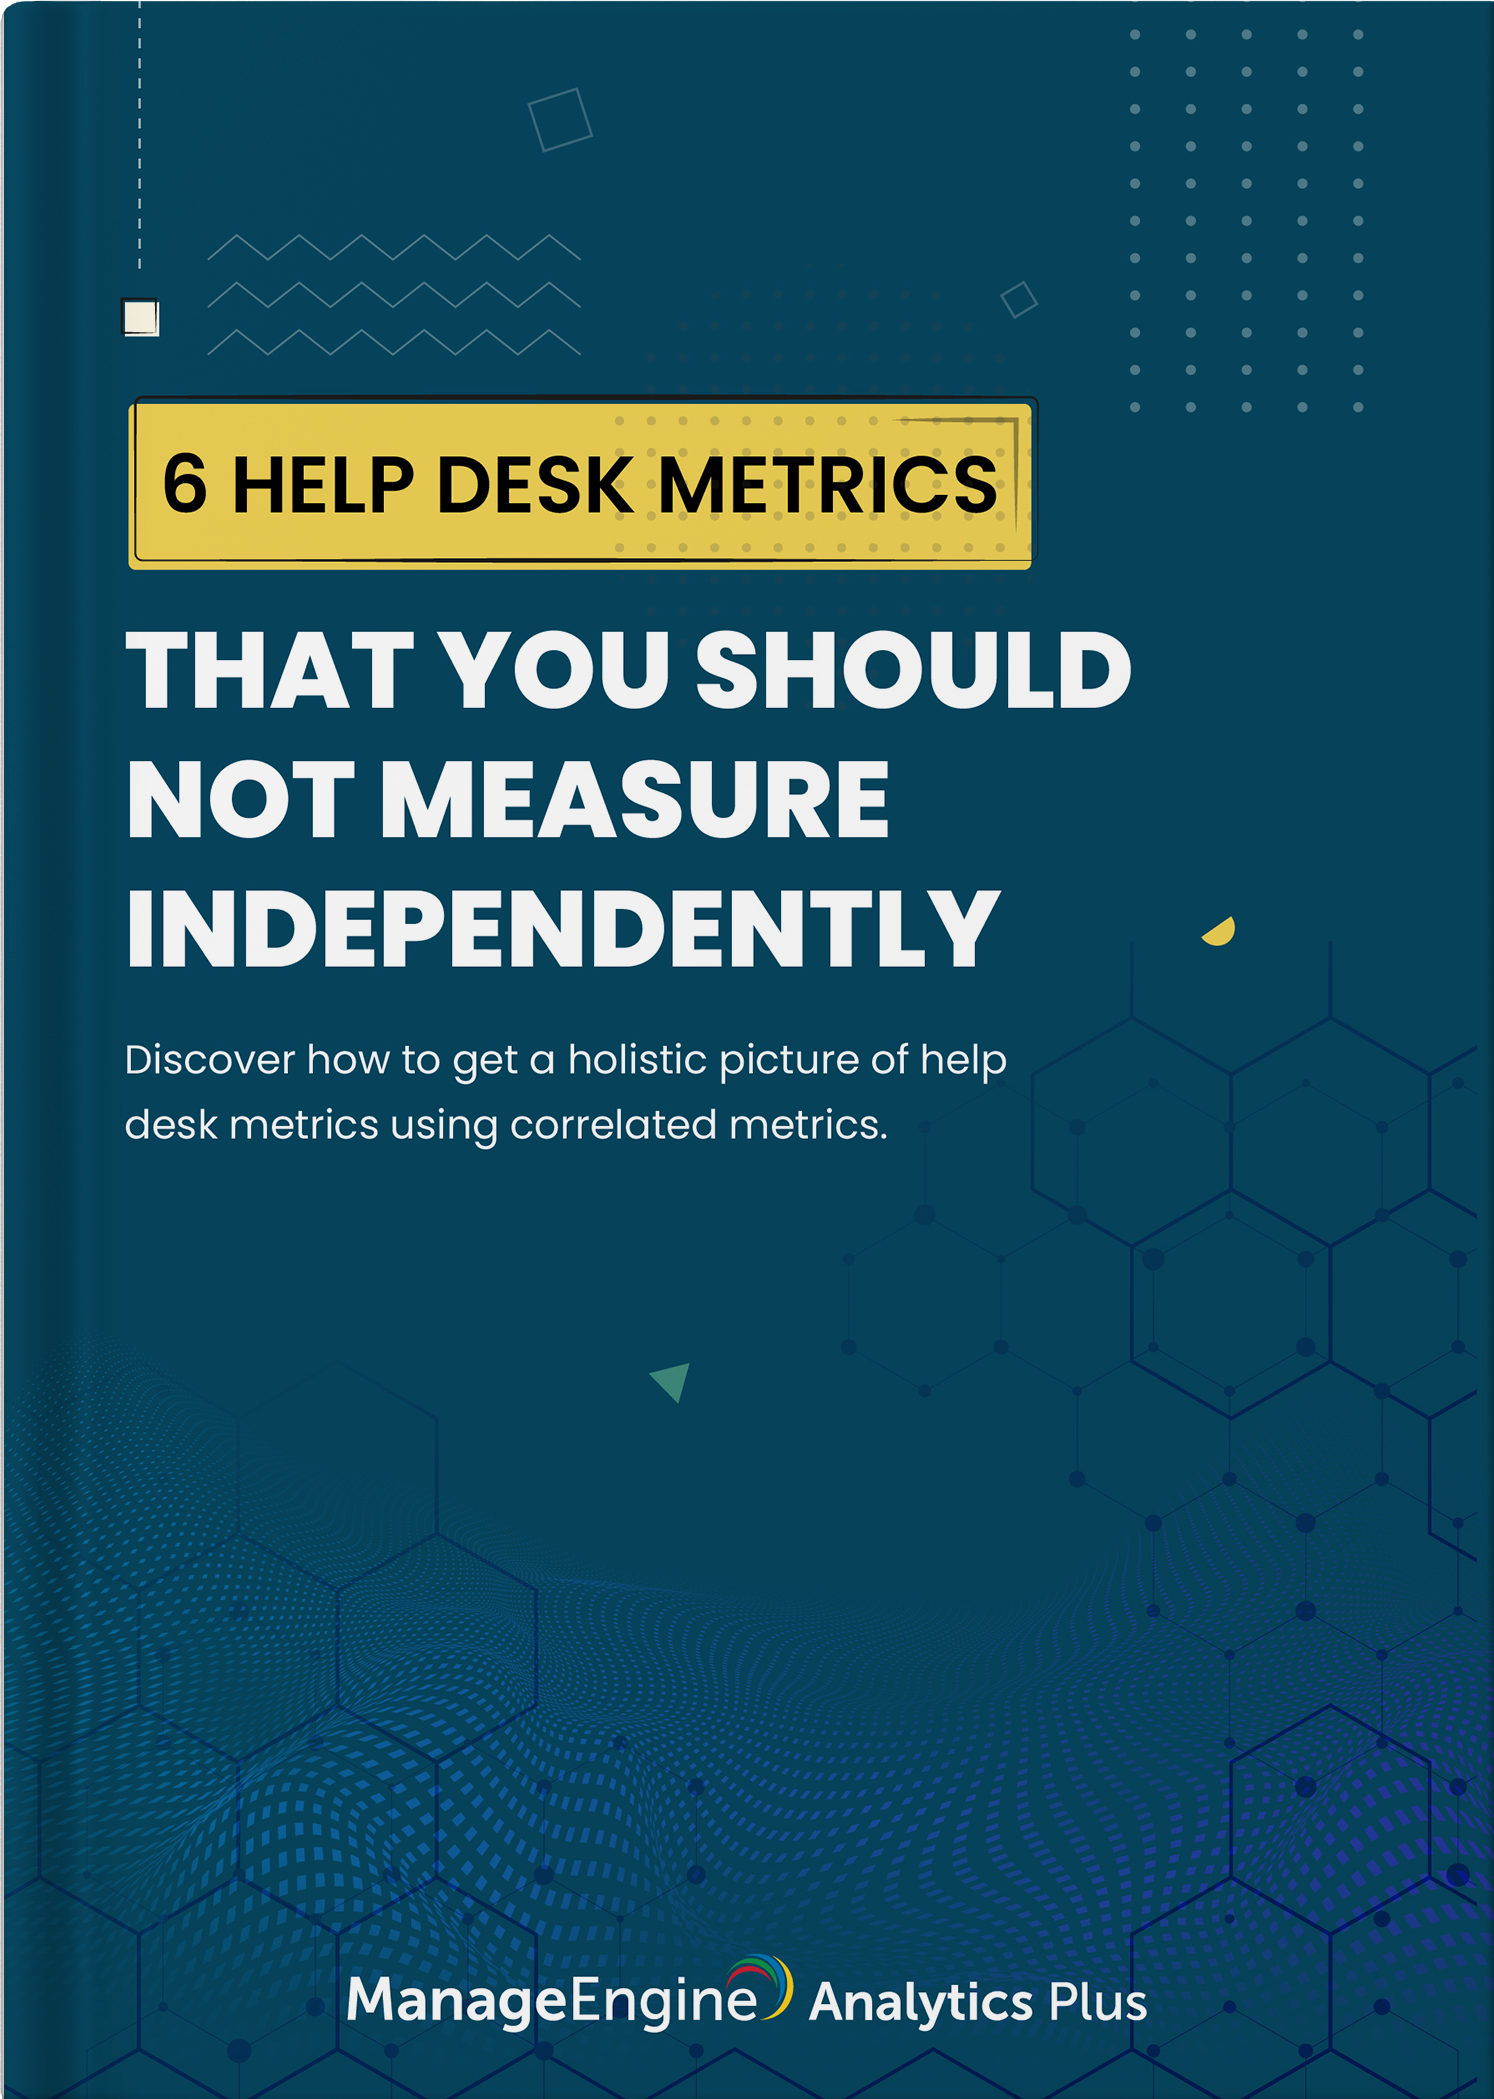 Correlated metrics and how to measure them using analytics